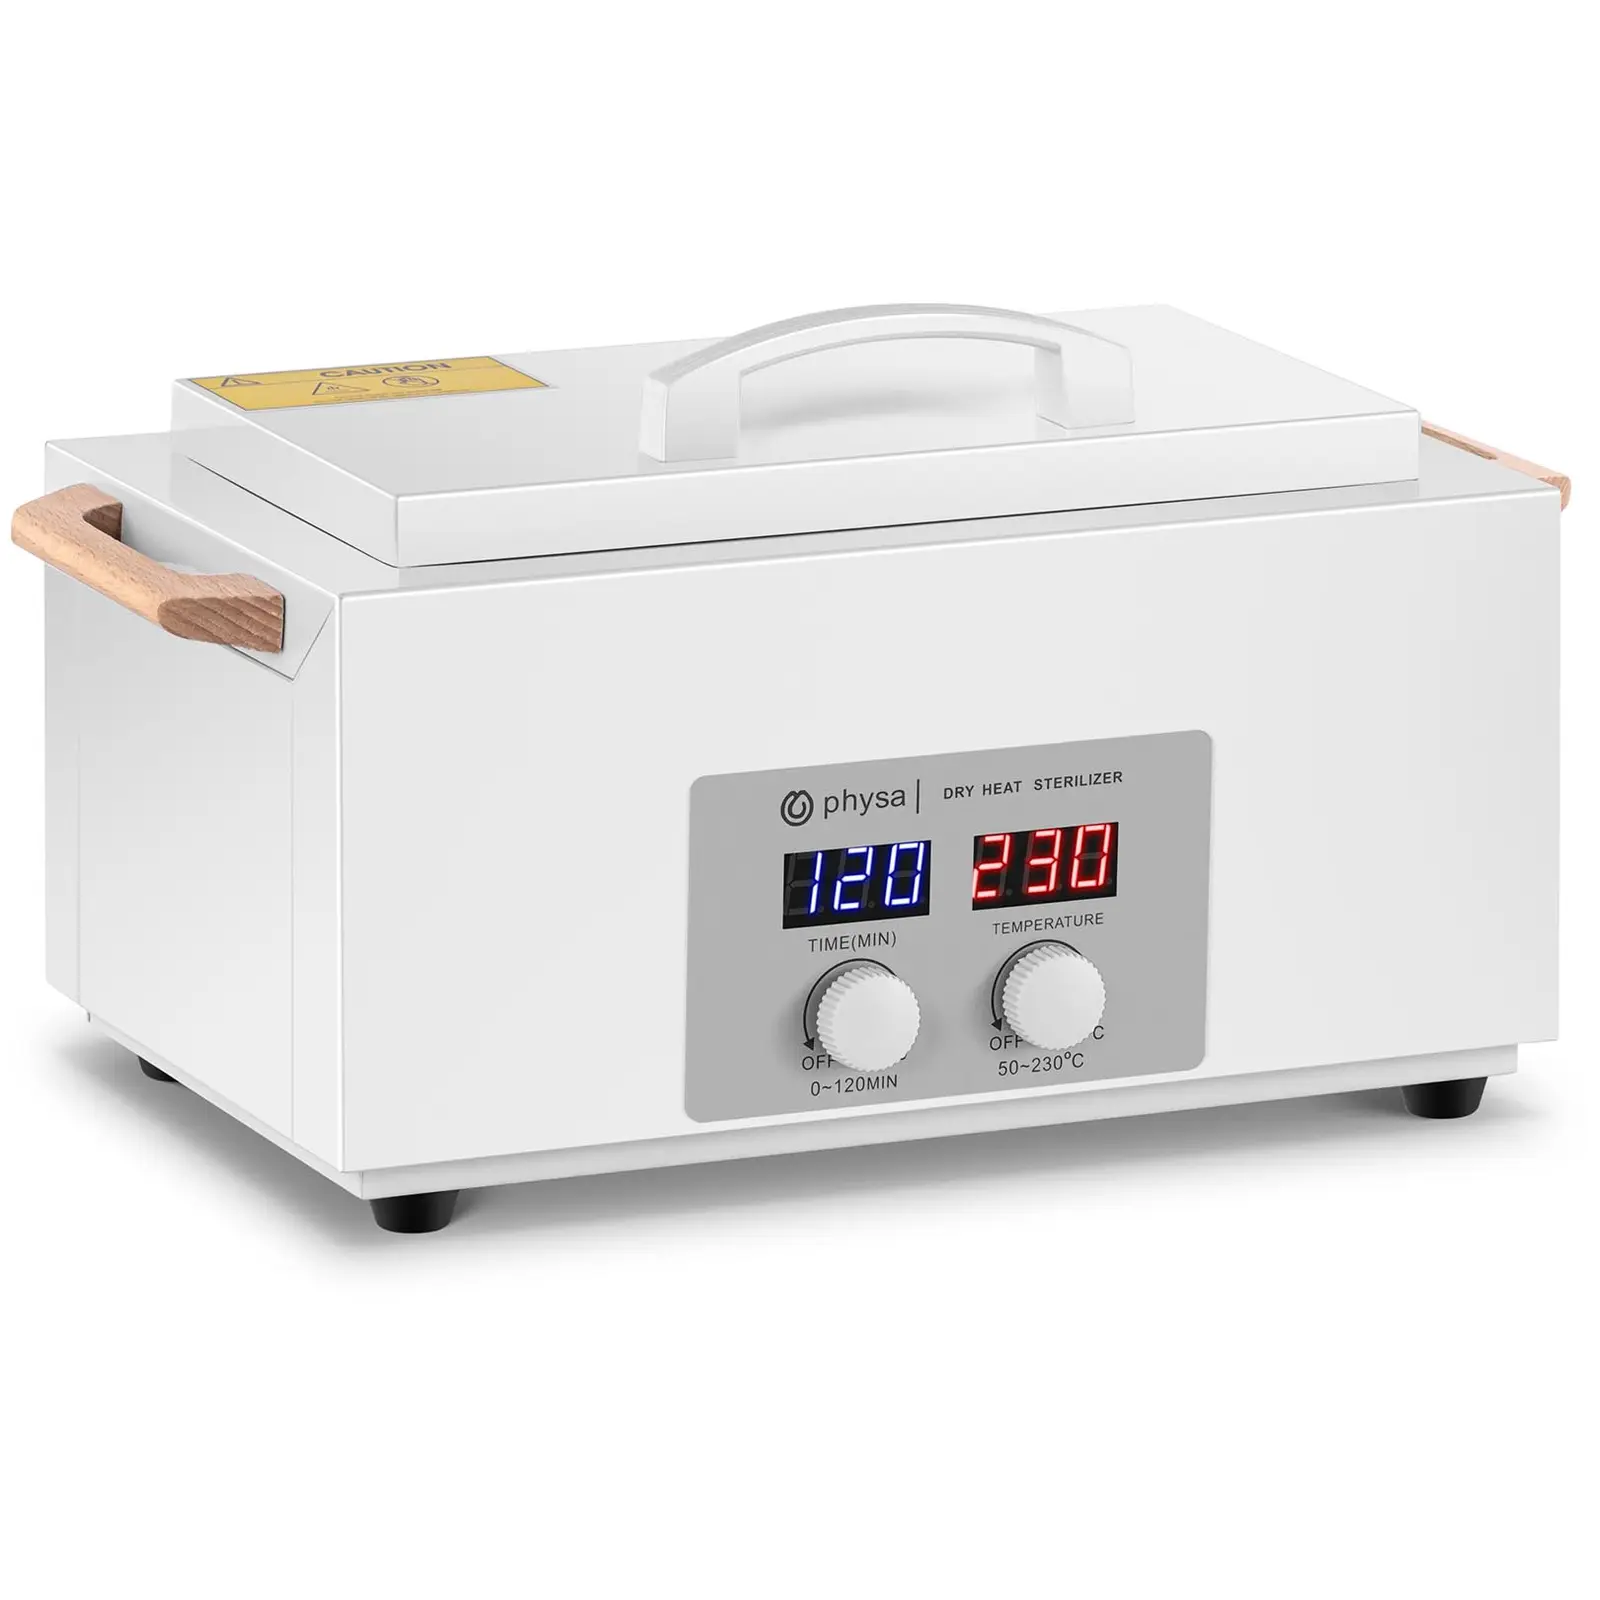 Hőlégsterilizátor - 1,8 l - időzítő - 50-230 °C